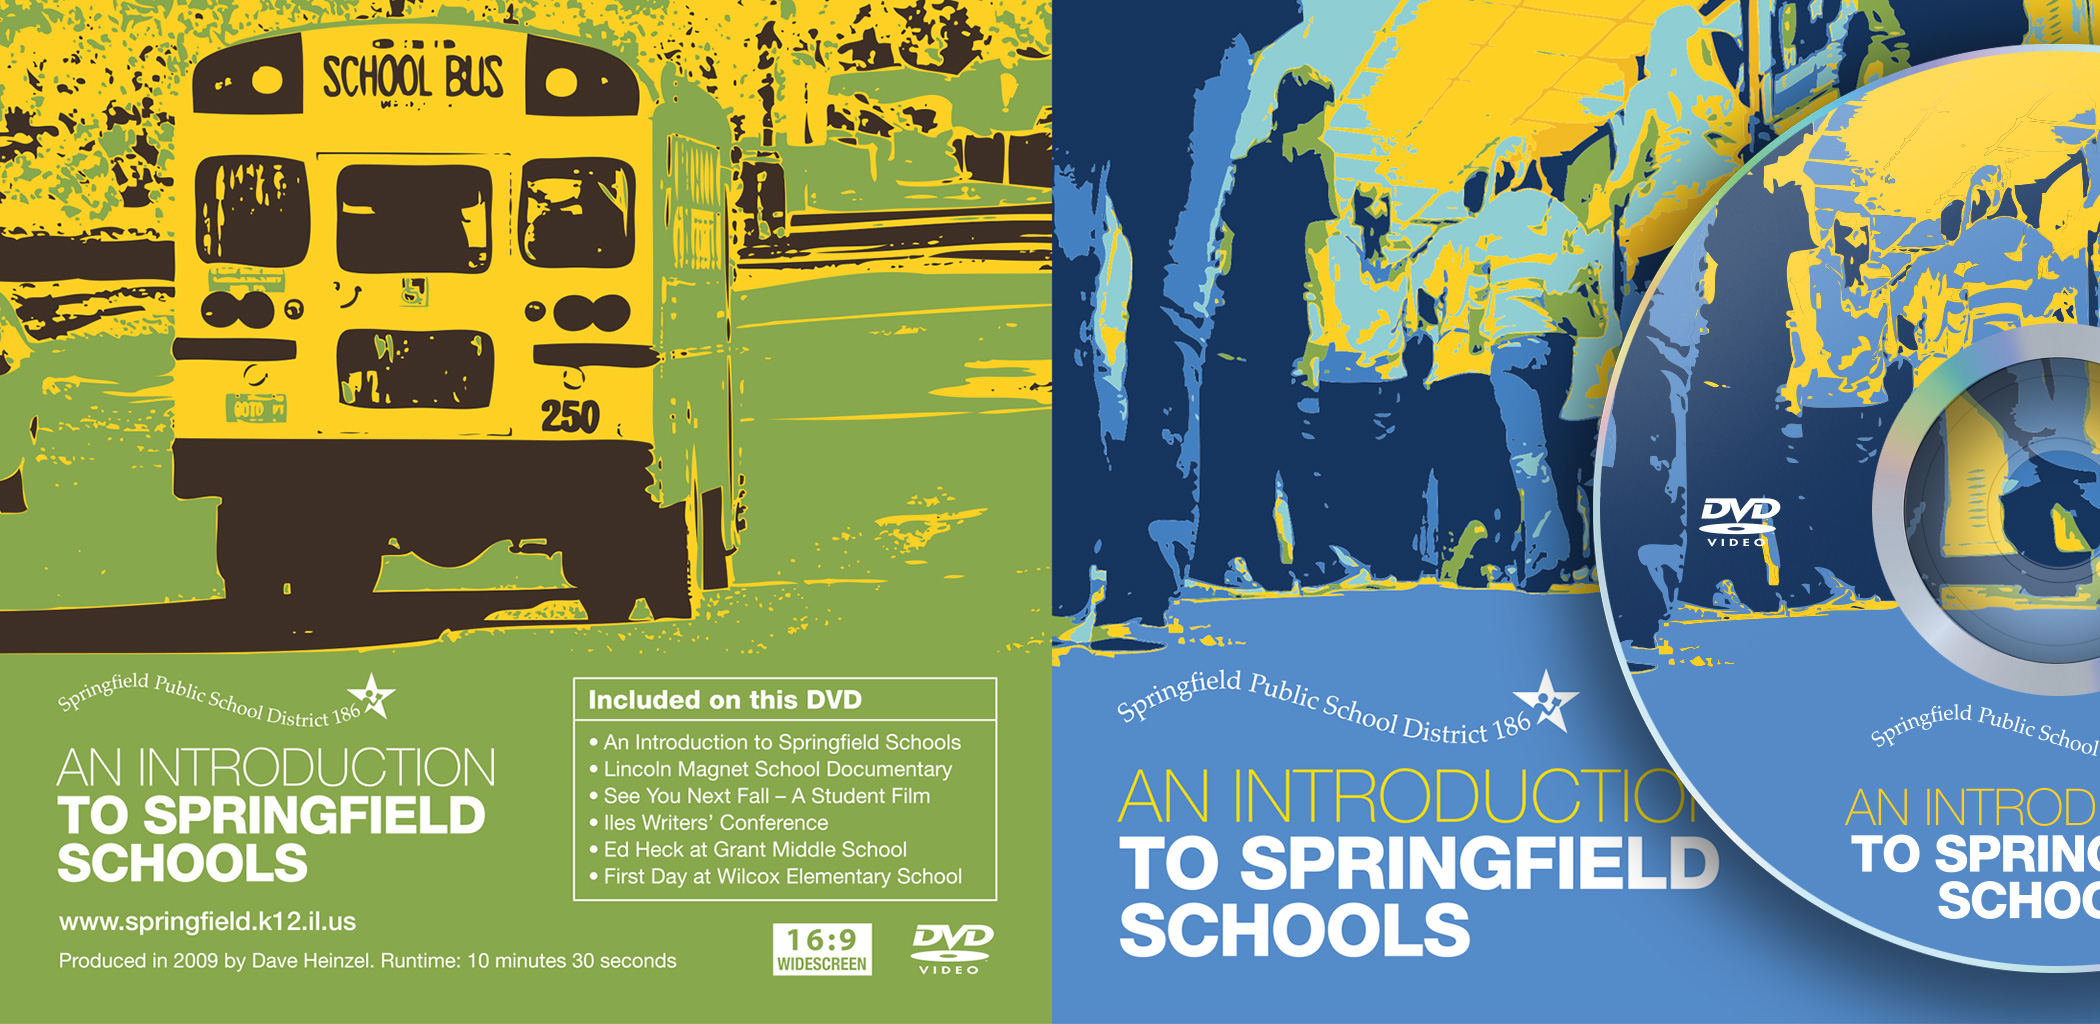 School District 186 DVD